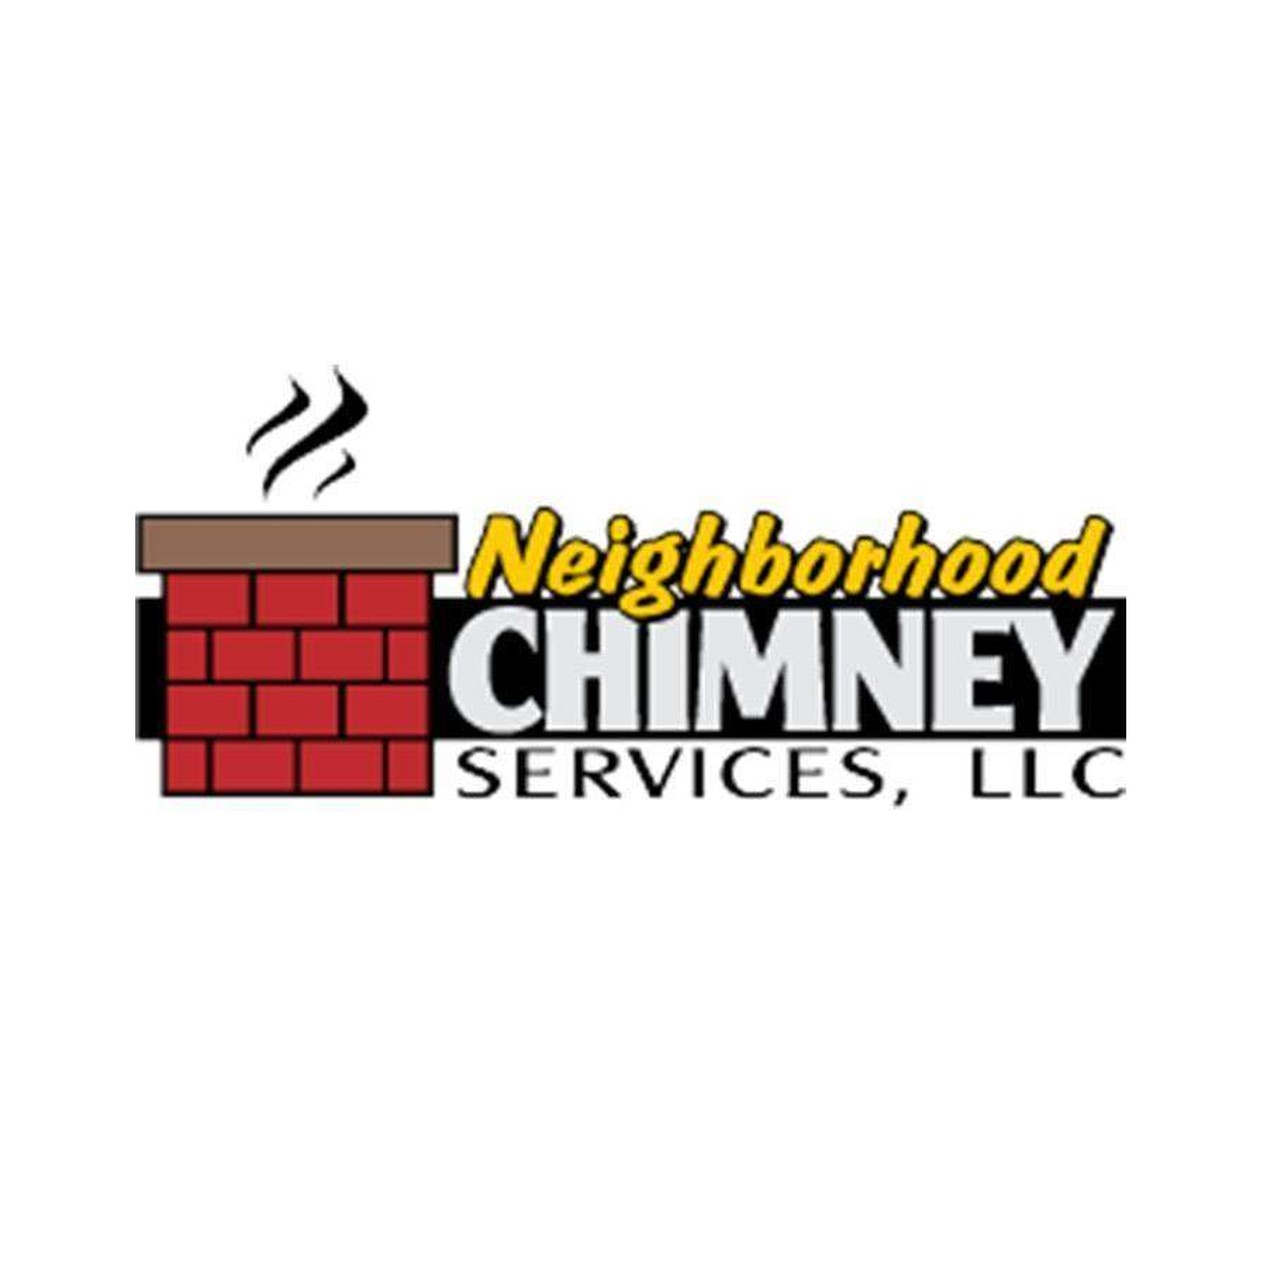 Neighborhood Chimney Services, LLC